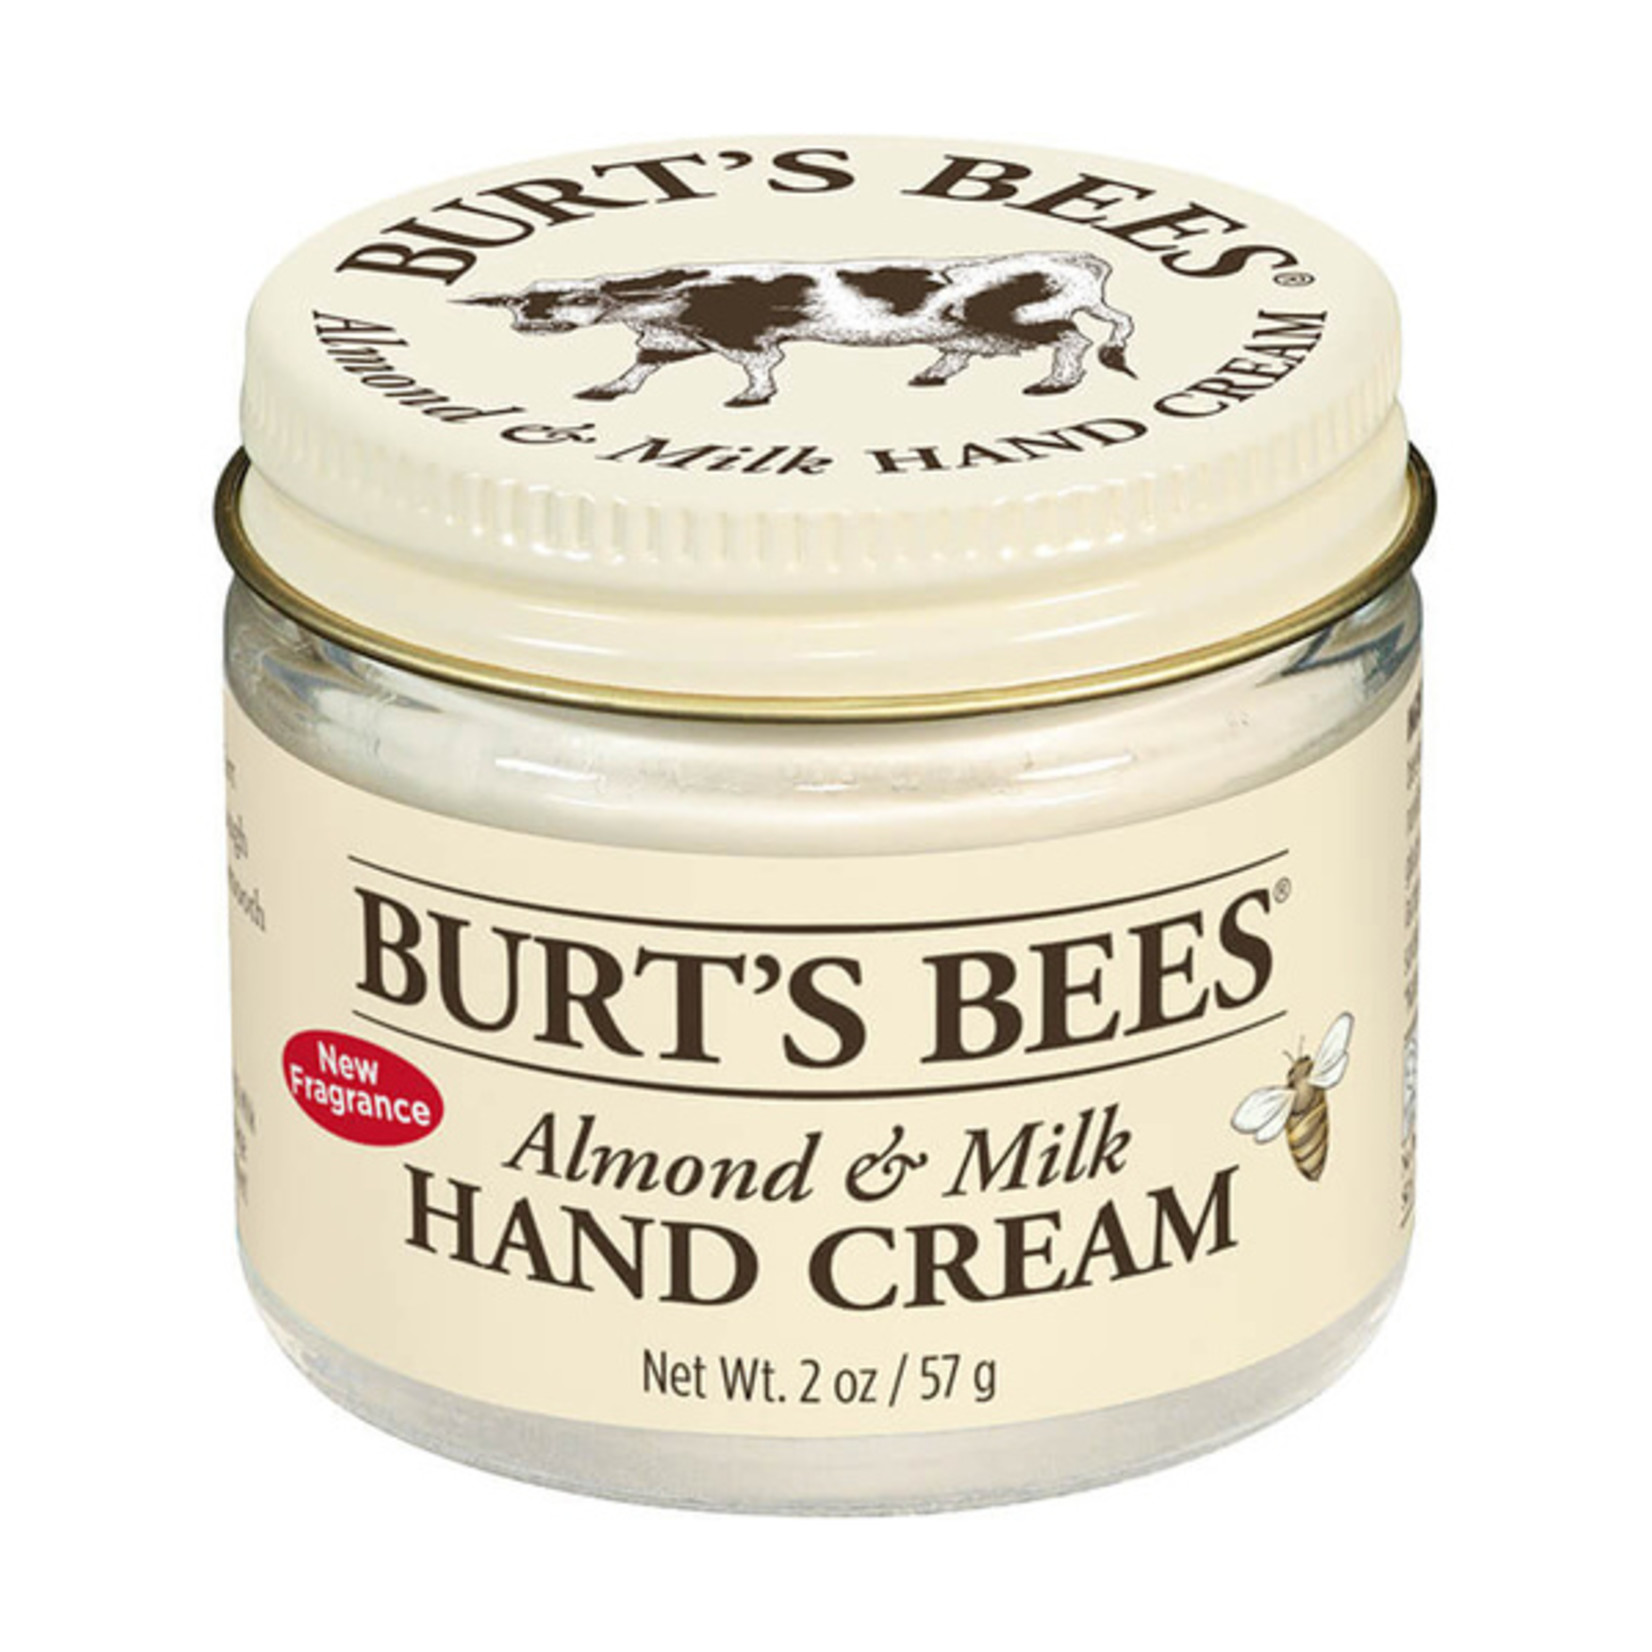 Burts Bees Burt's Bees Almond & Milk Hand Cream